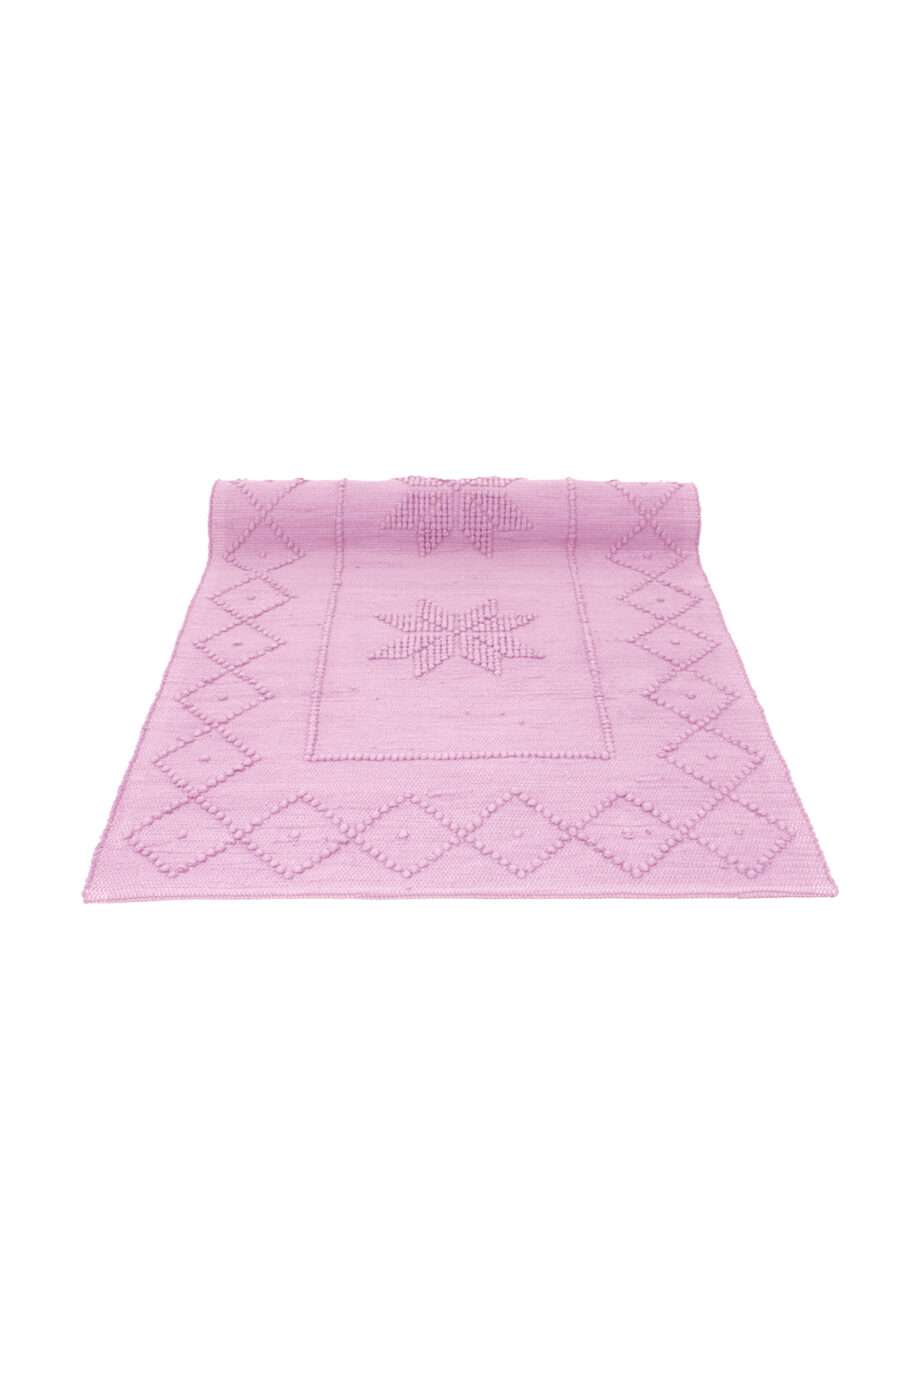 star baby pink woven cotton badmat